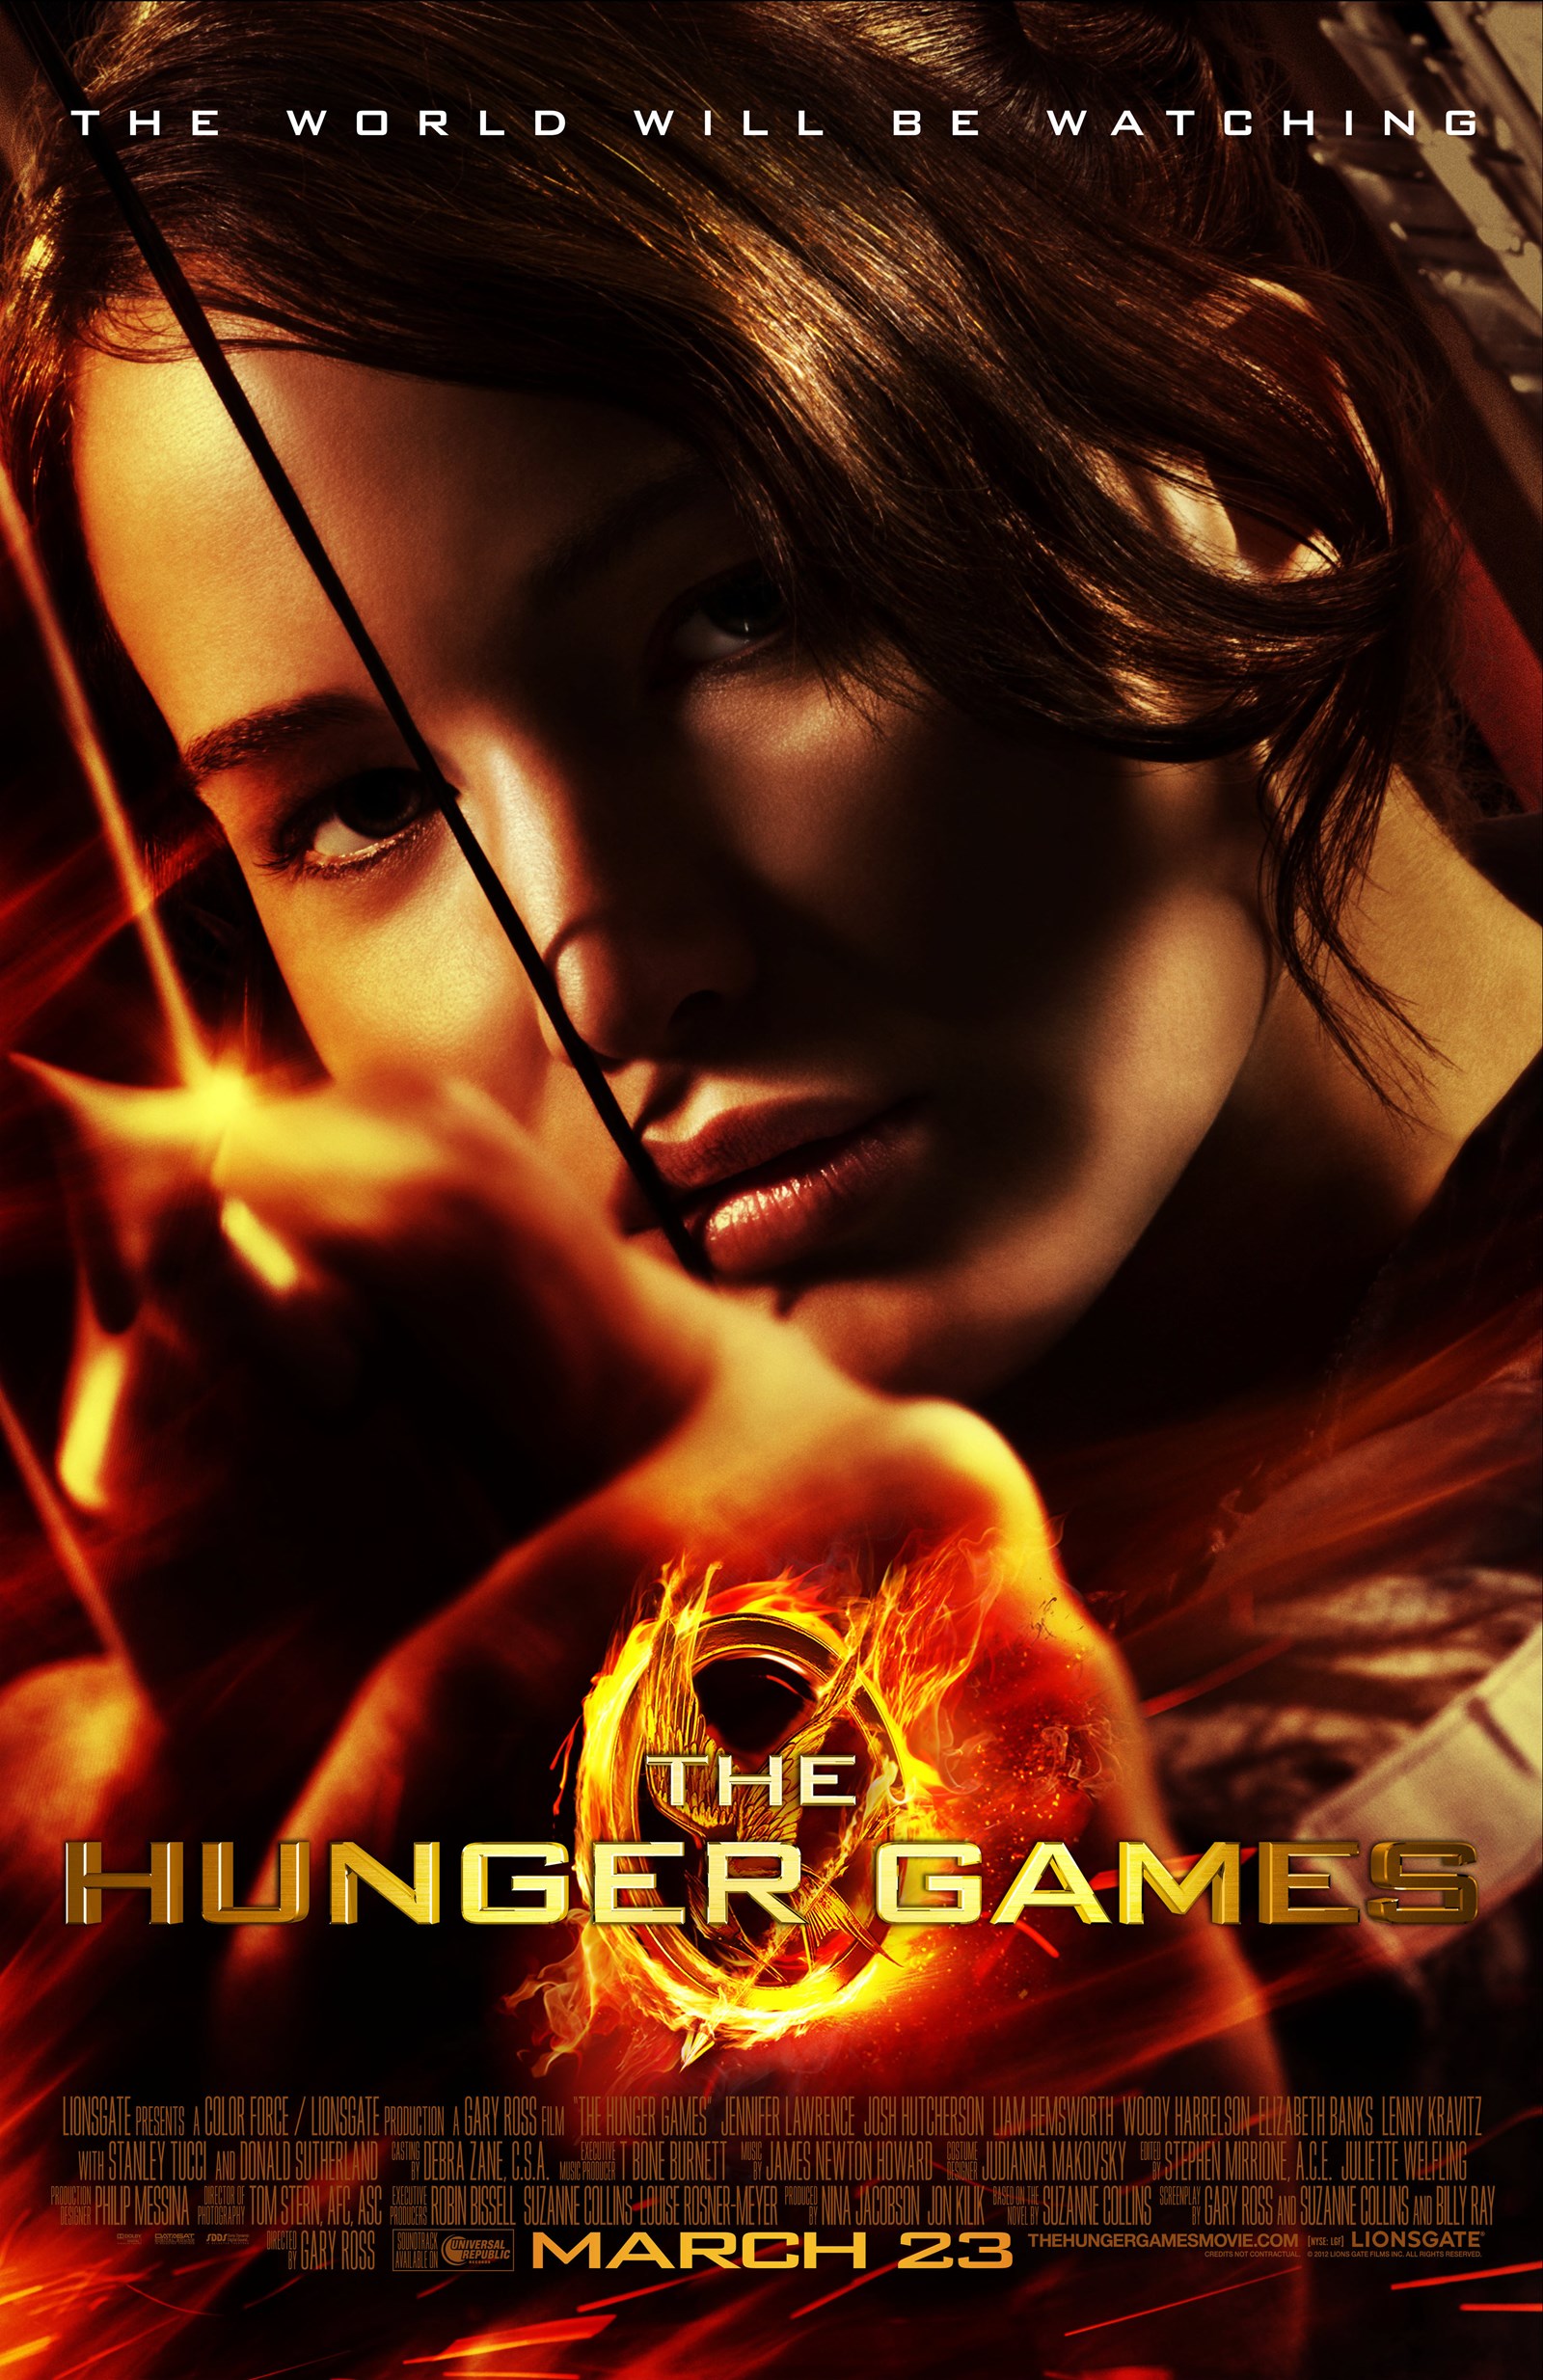 Nonton Film The Hunger Games Sub Indonesia